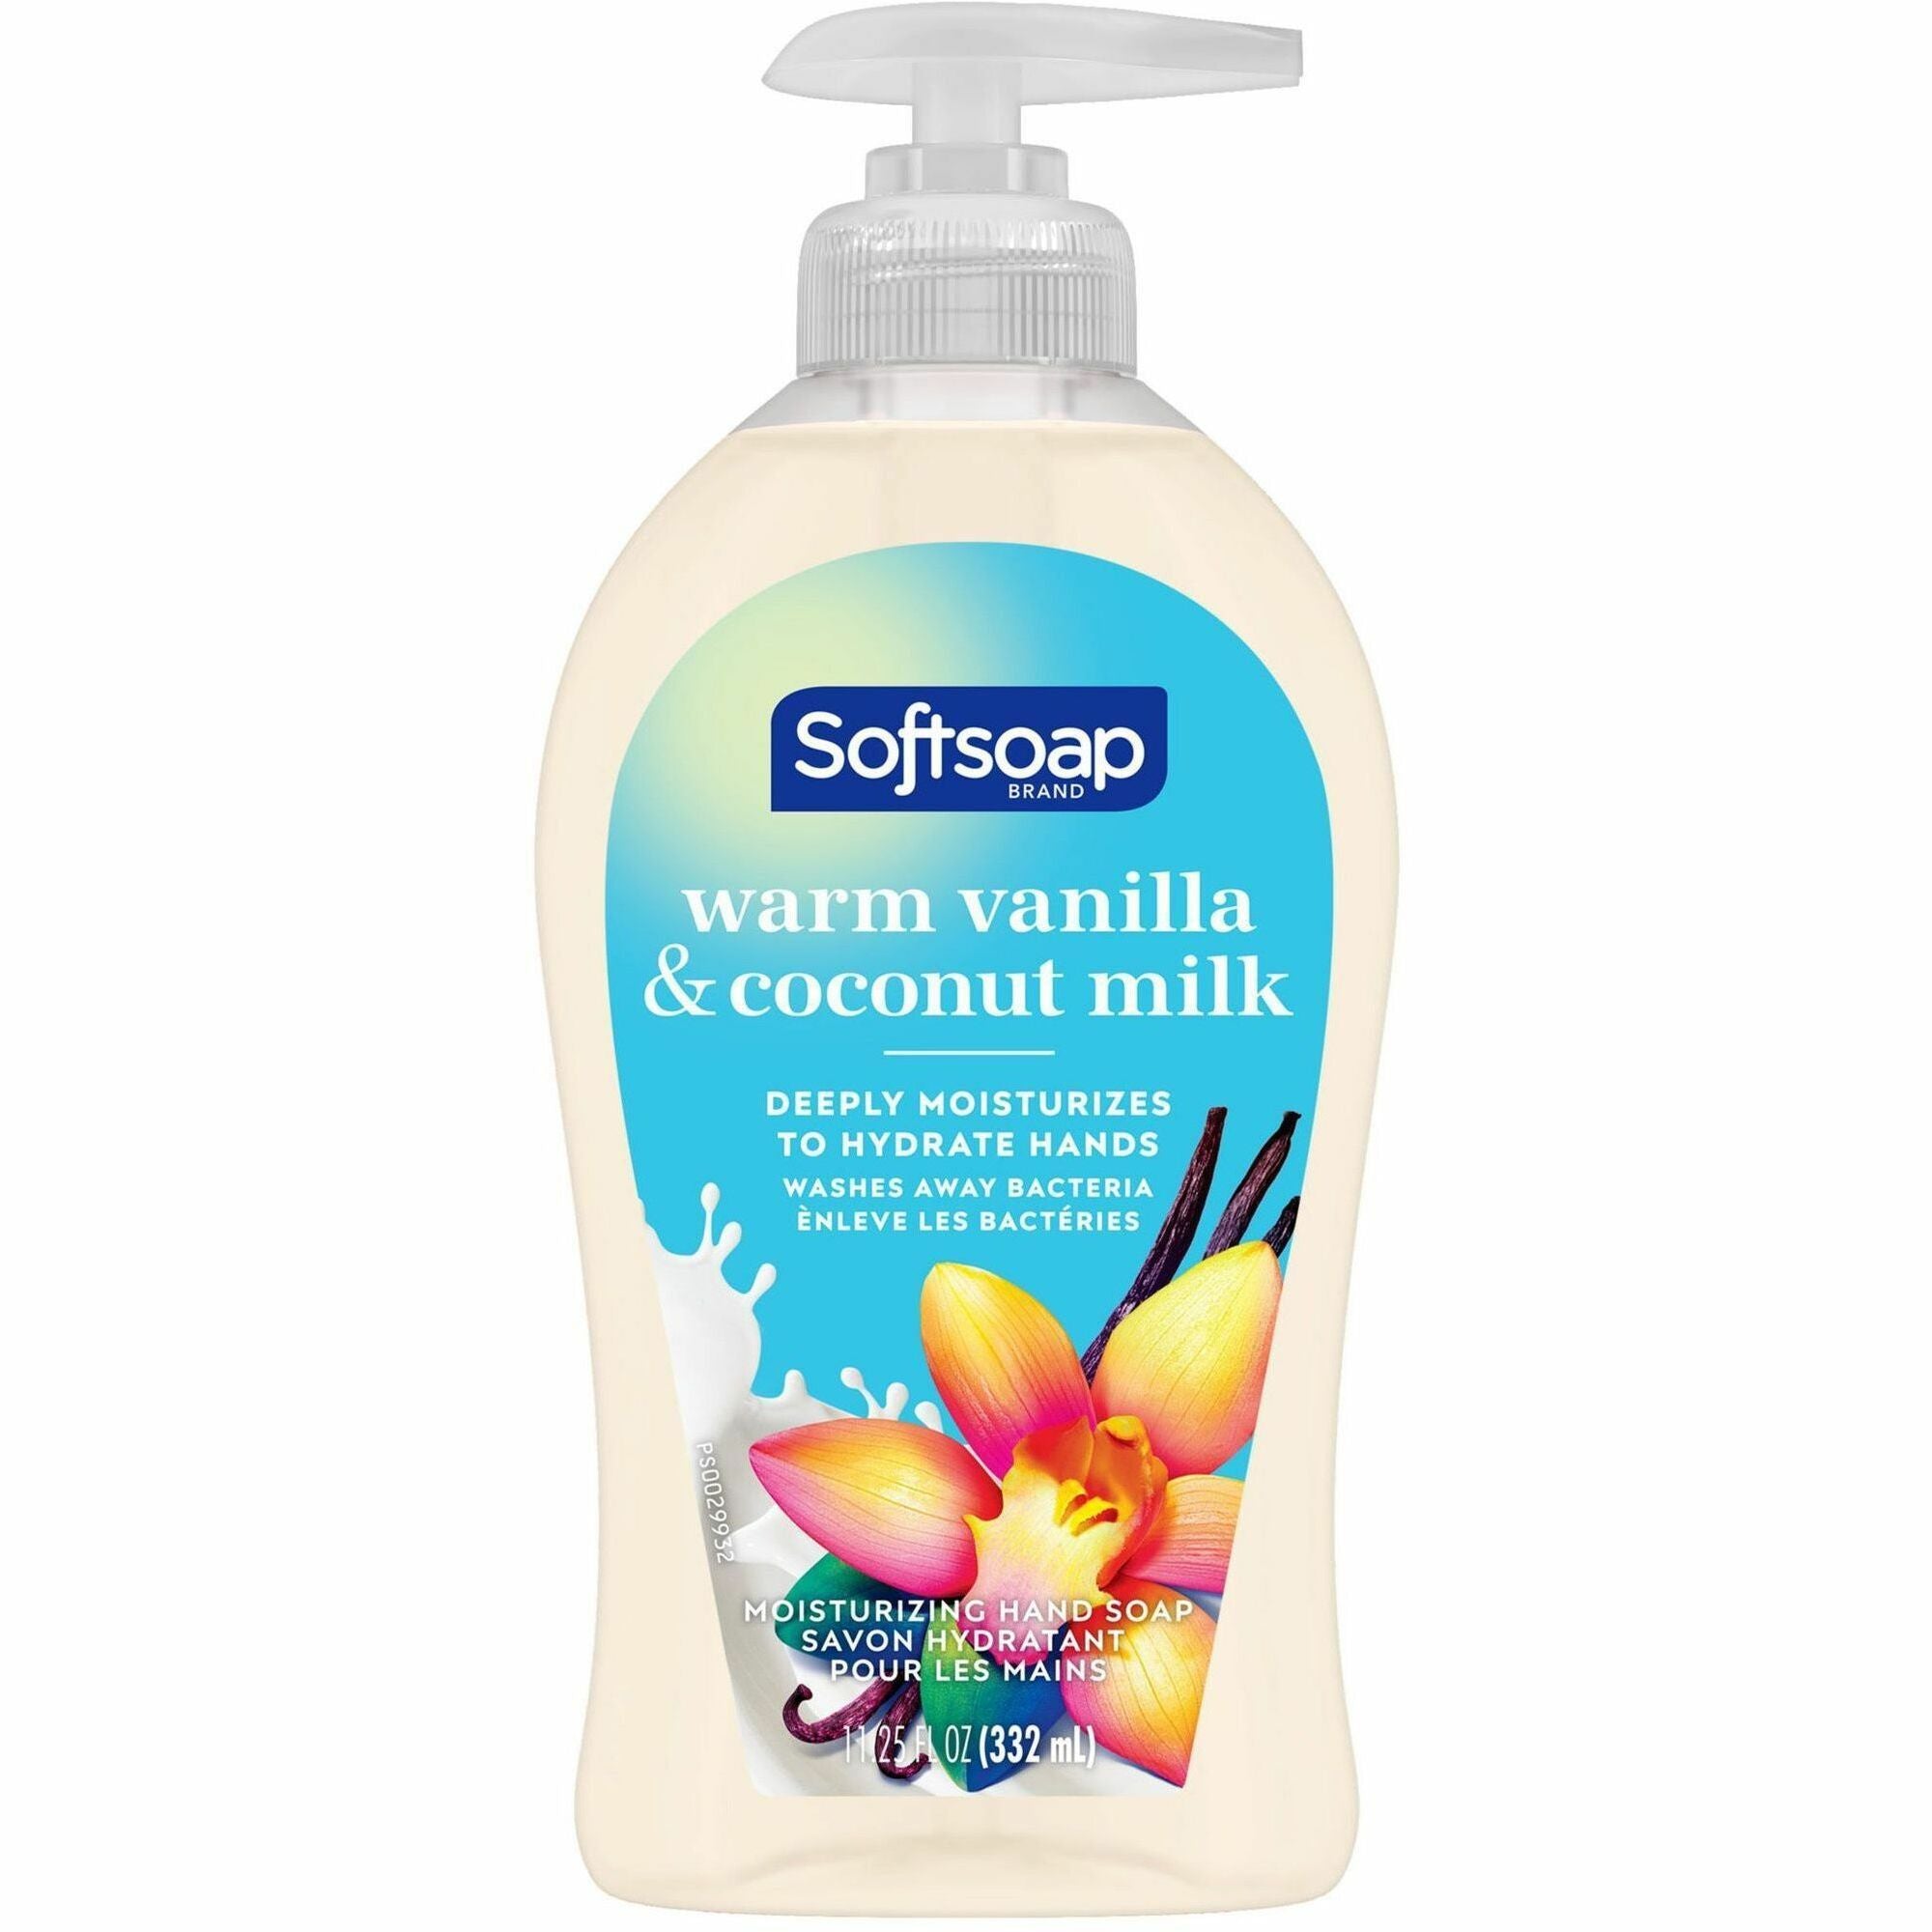 softsoap-warm-vanilla-hand-soap-warm-vanilla-&-coconut-milk-scentfor-113-fl-oz-3327-ml-pump-bottle-dispenser-bacteria-remover-dirt-remover-hand-skin-moisturizing-white-refillable-recyclable-paraben-free-phthalate-free-biodeg_cpcus07059a - 1